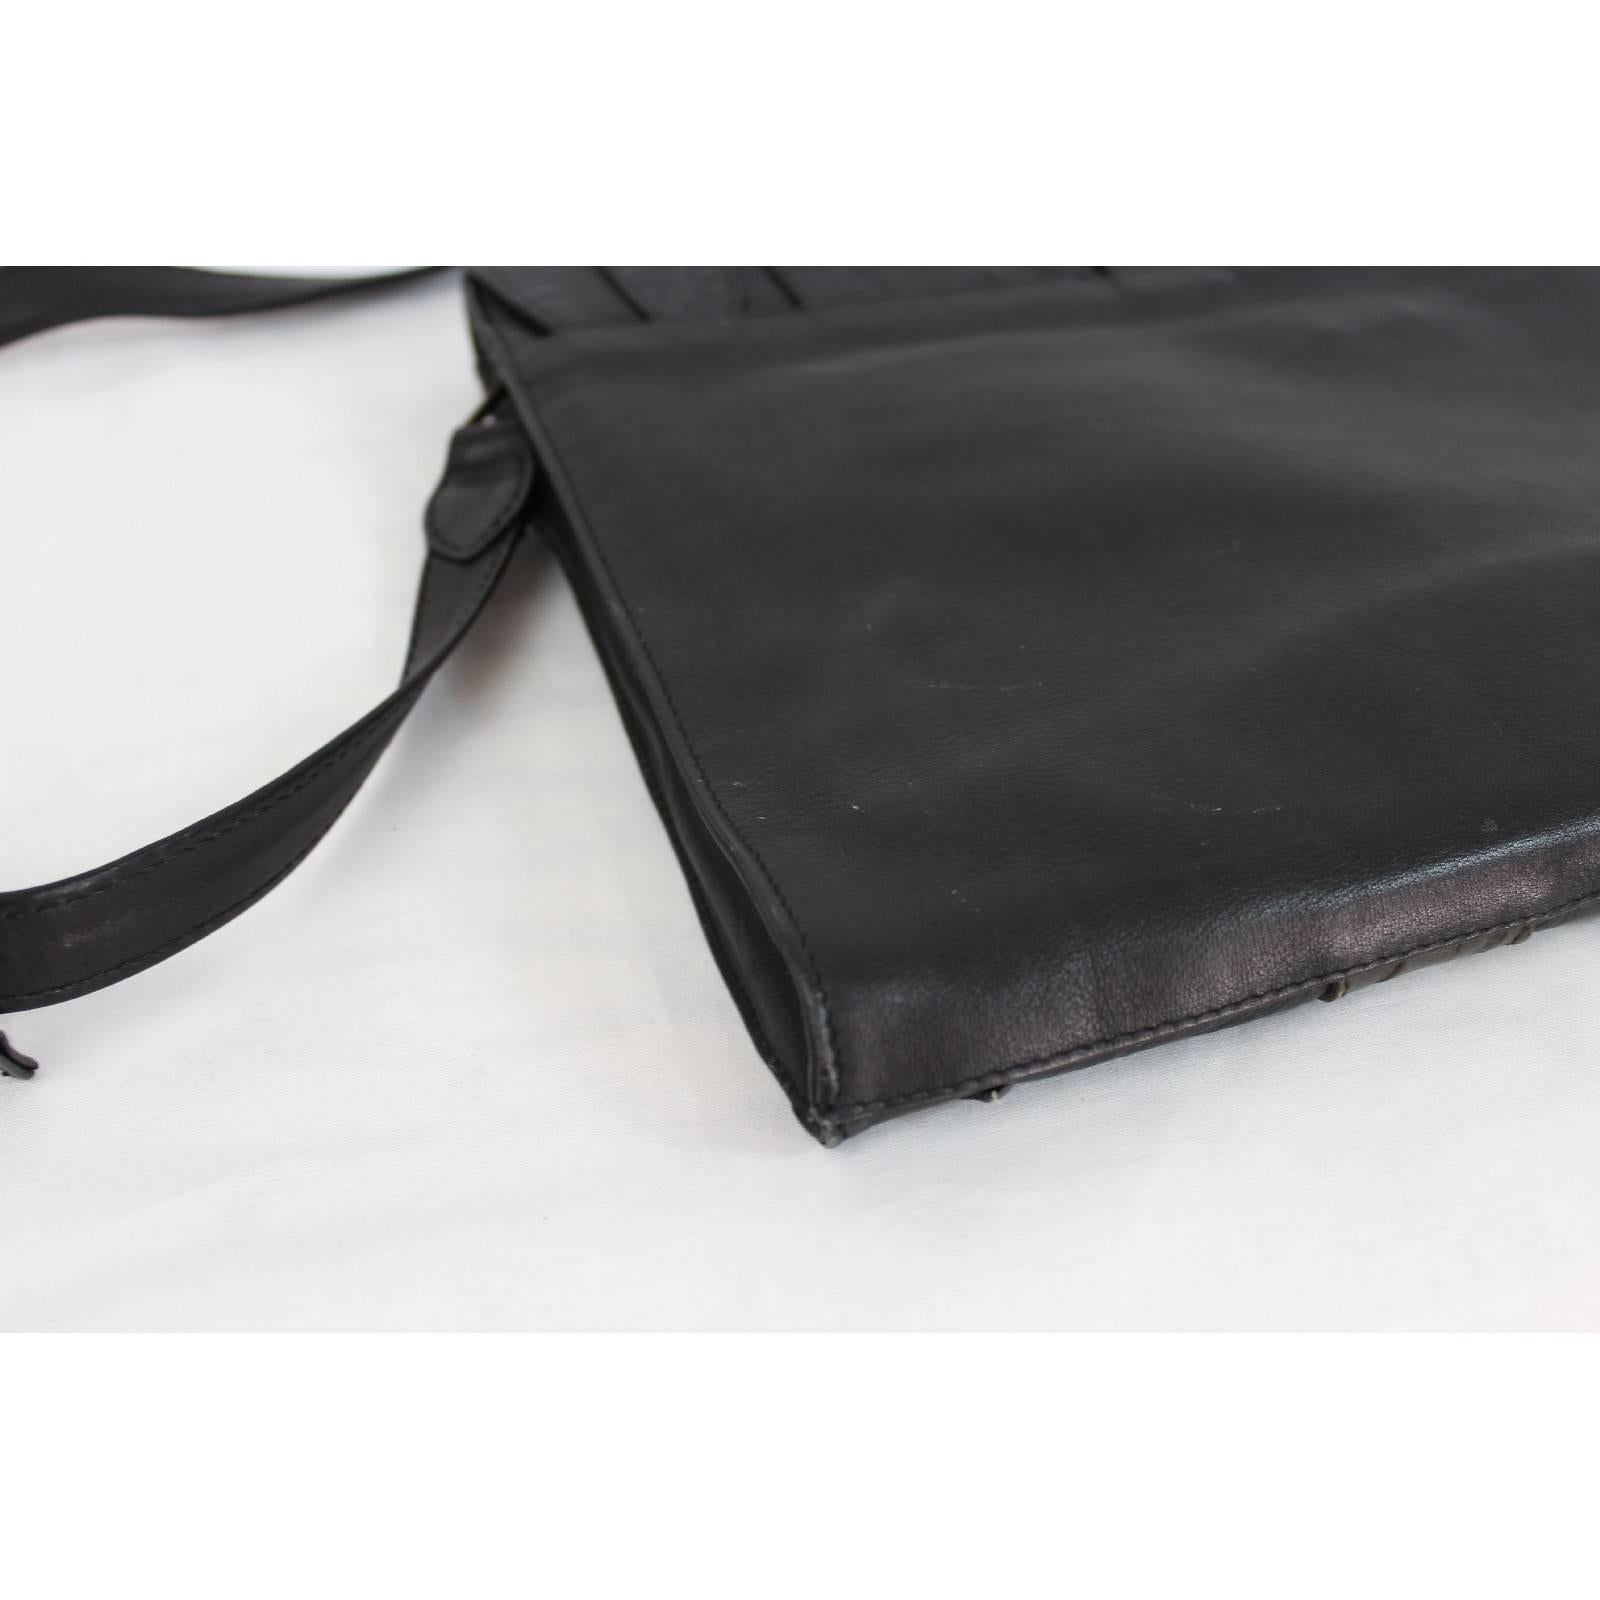 Women's Giorgio Armani leather black shoulder bag excellent condition 1990s women’s For Sale